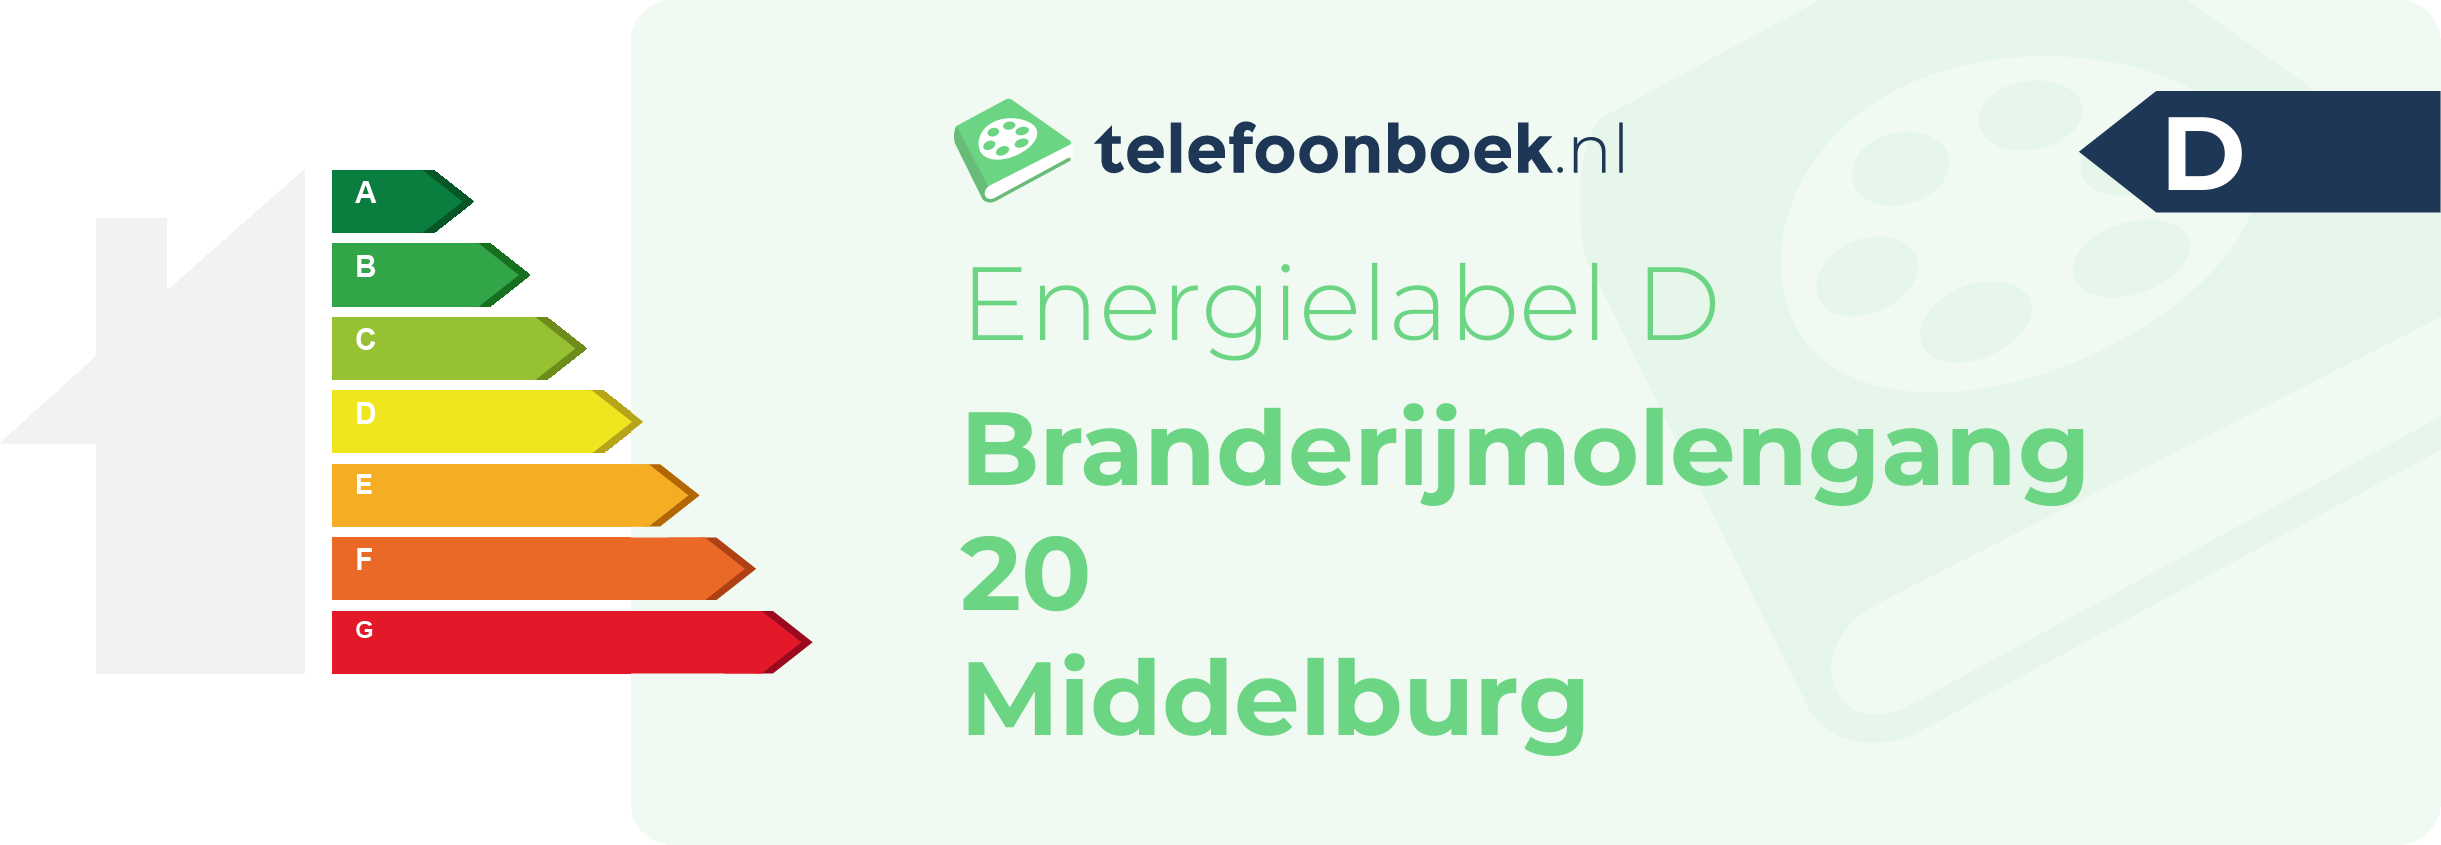 Energielabel Branderijmolengang 20 Middelburg